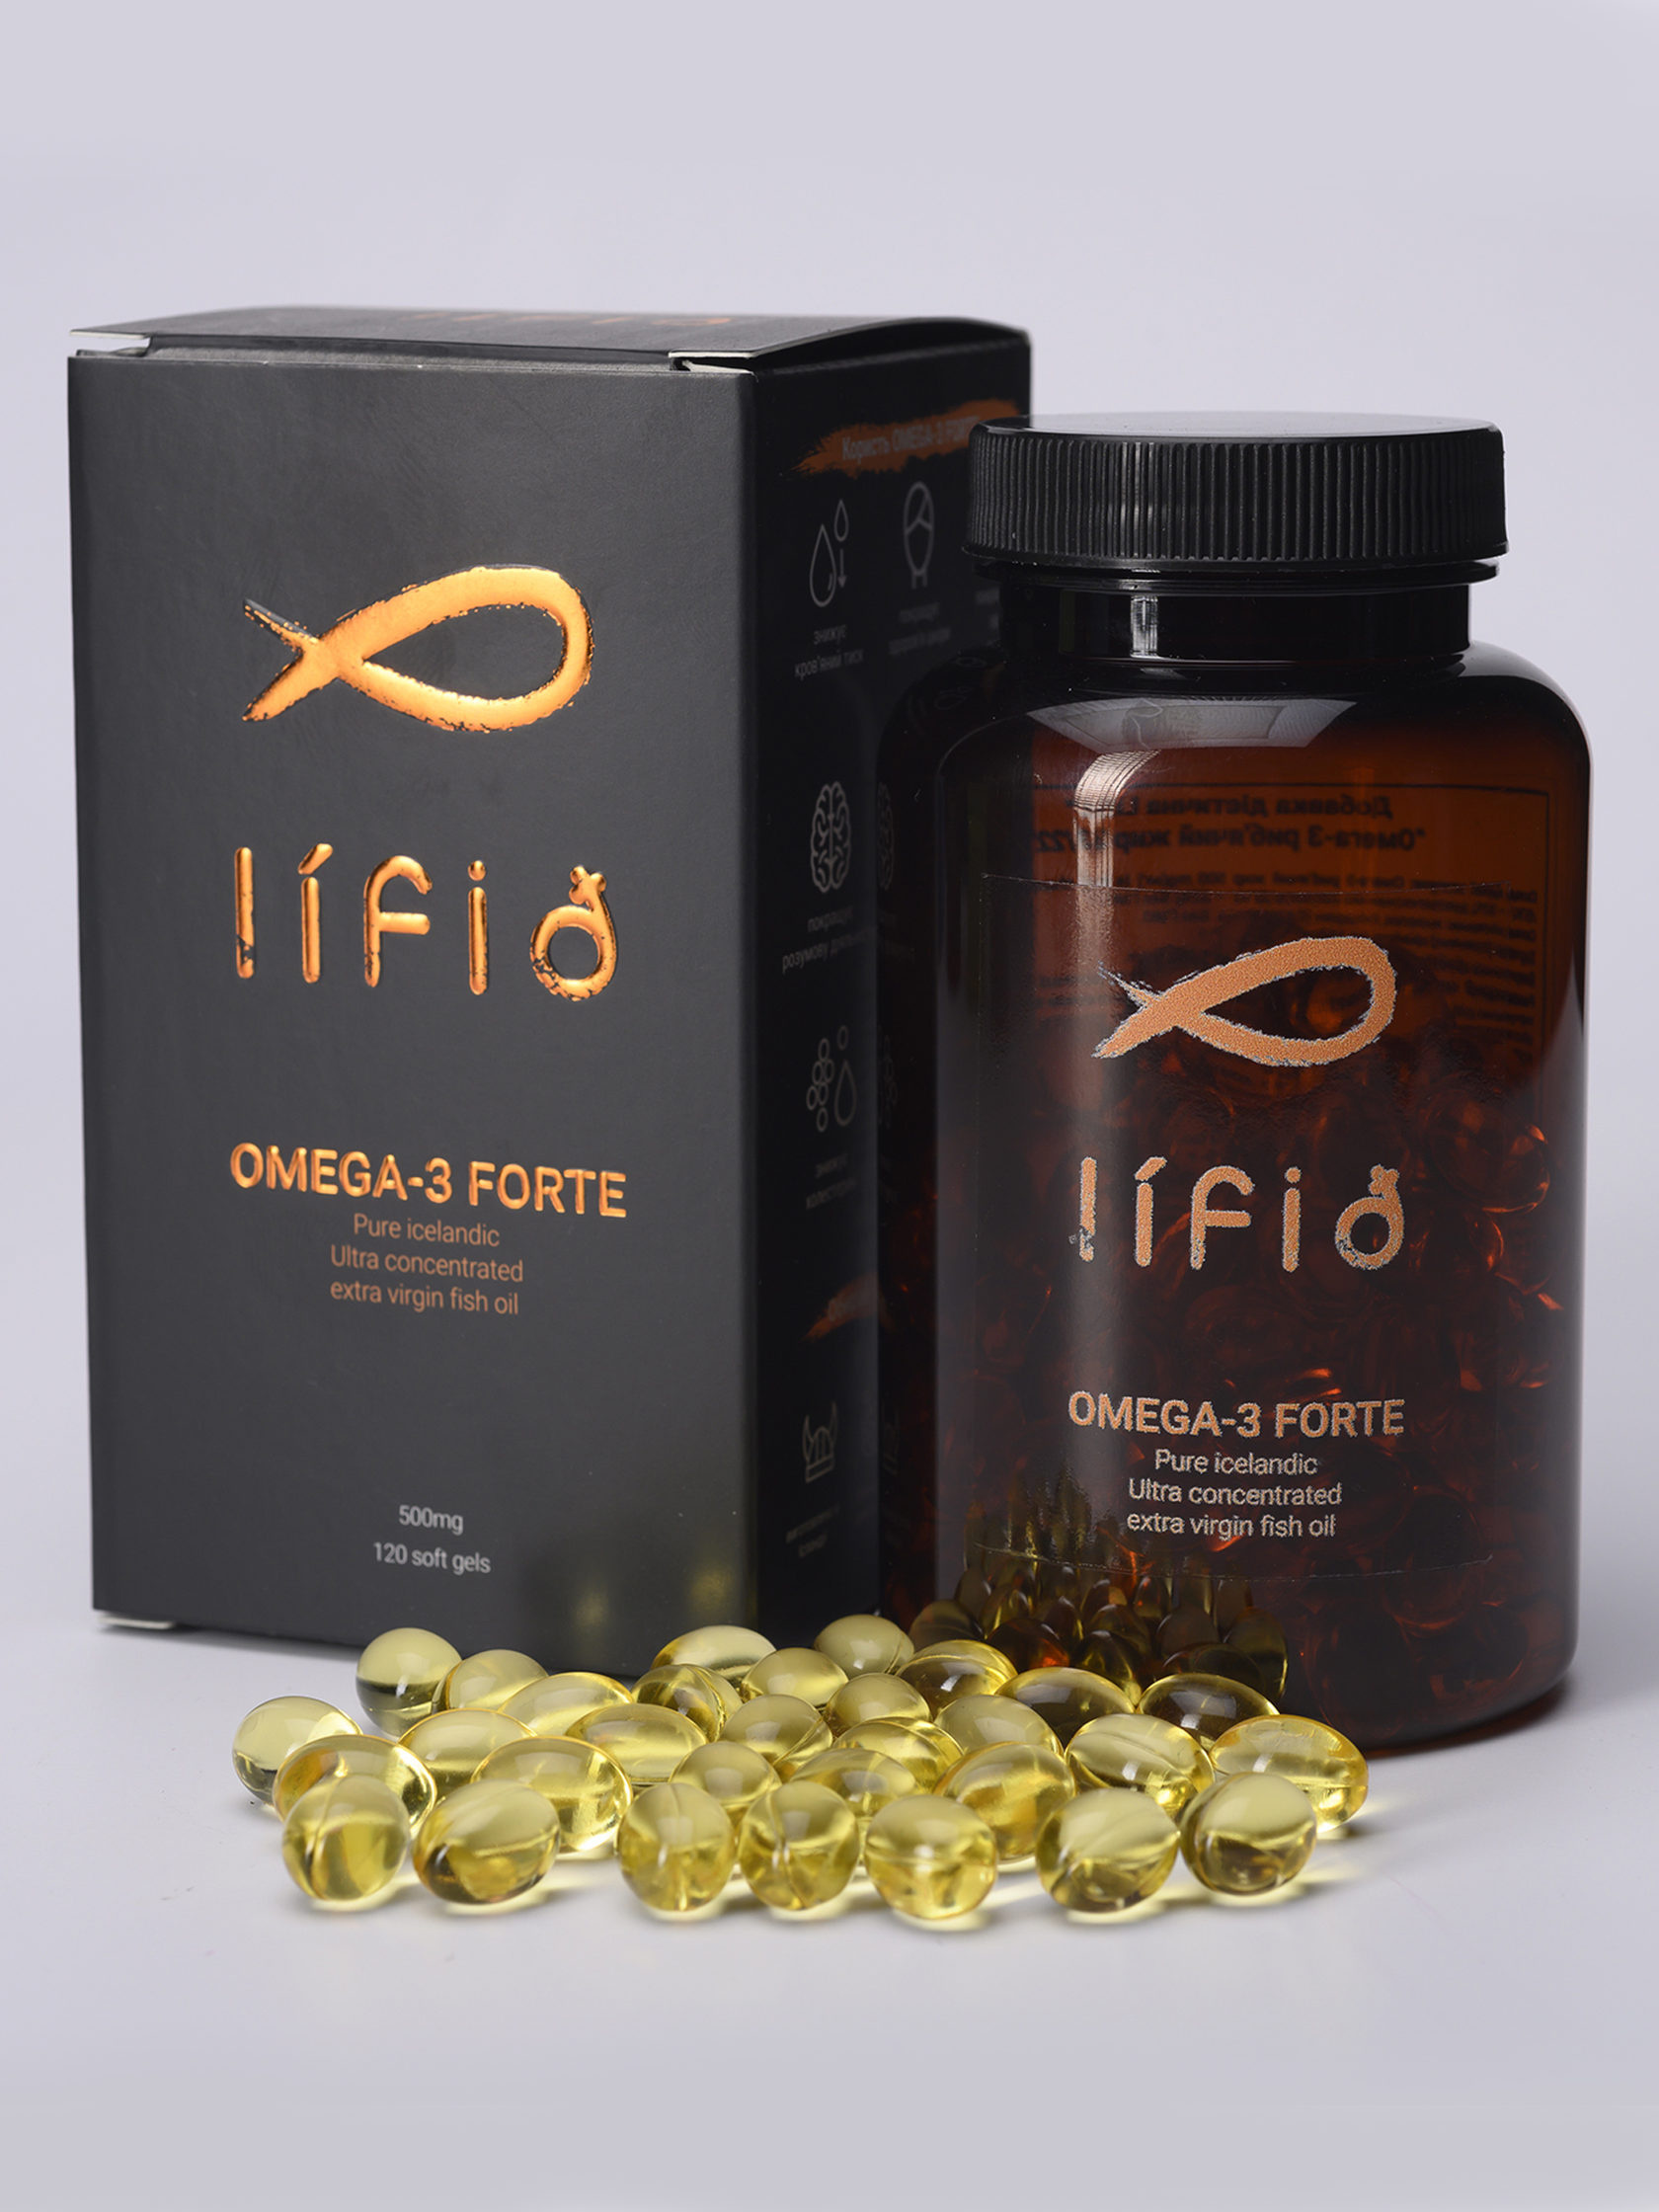 Lysi omega 3 капсулы отзывы. Омега 3 форте. Омега-3 форте капсулы. Lysi Omega-3 Forte капсулы. Омега-3 Forte Лиси рыбий жир.